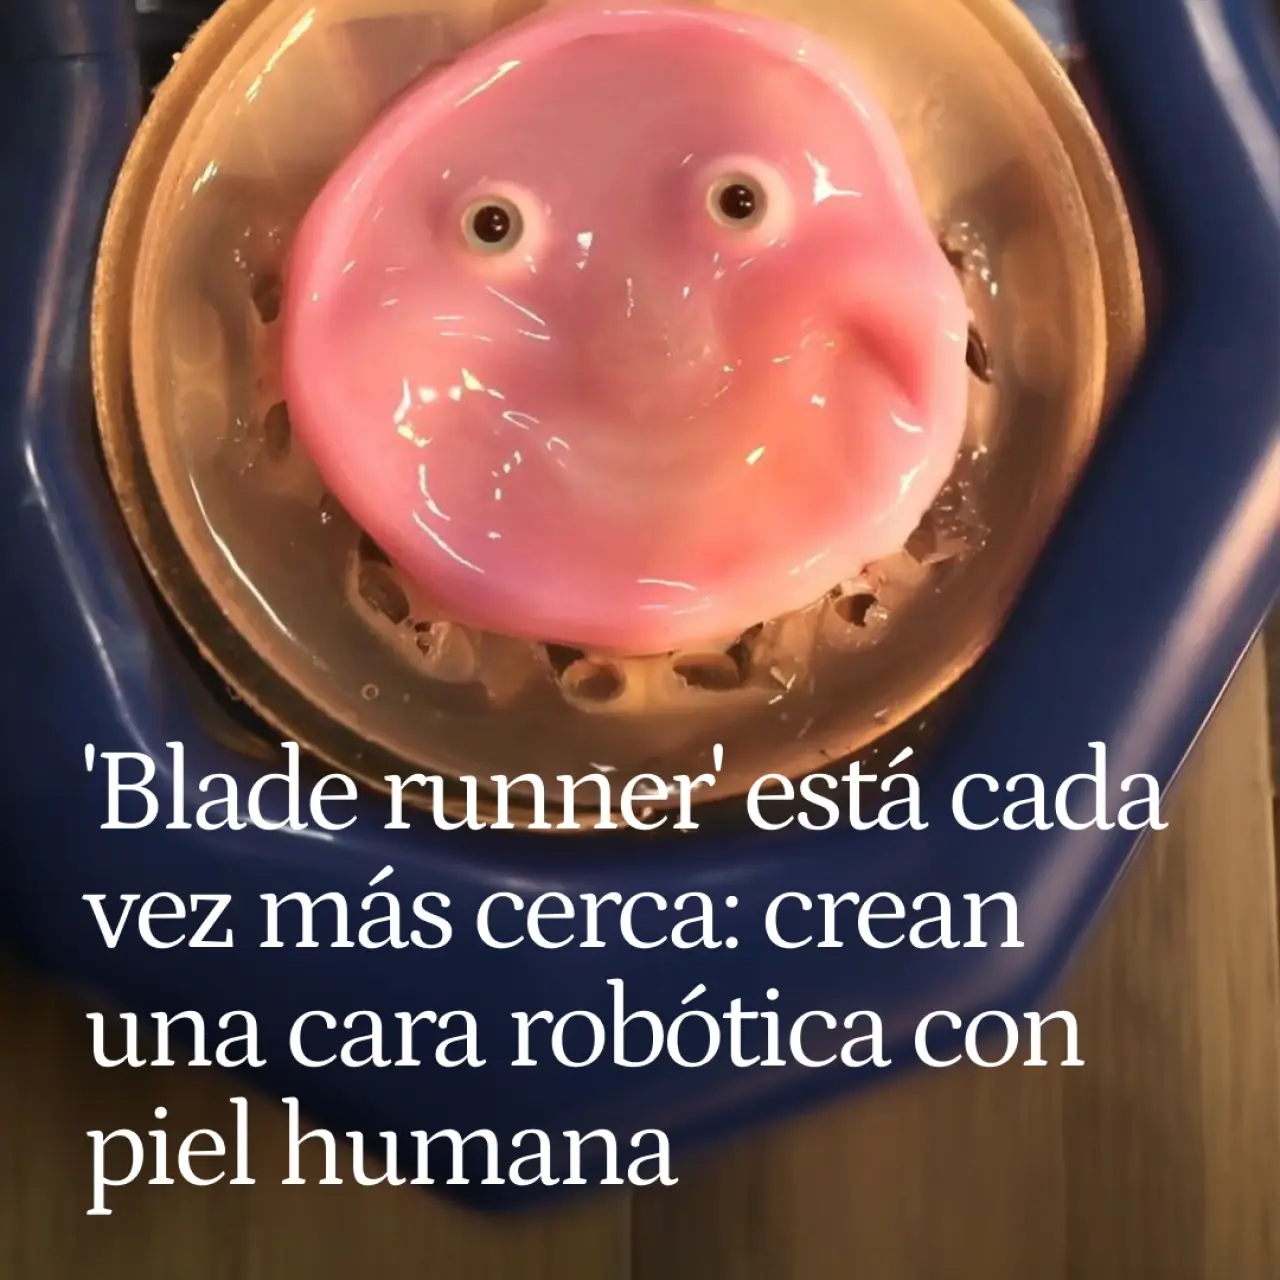 'Blade runner' está cada vez más cerca: crean una cara robótica con piel humana capaz de sonreír